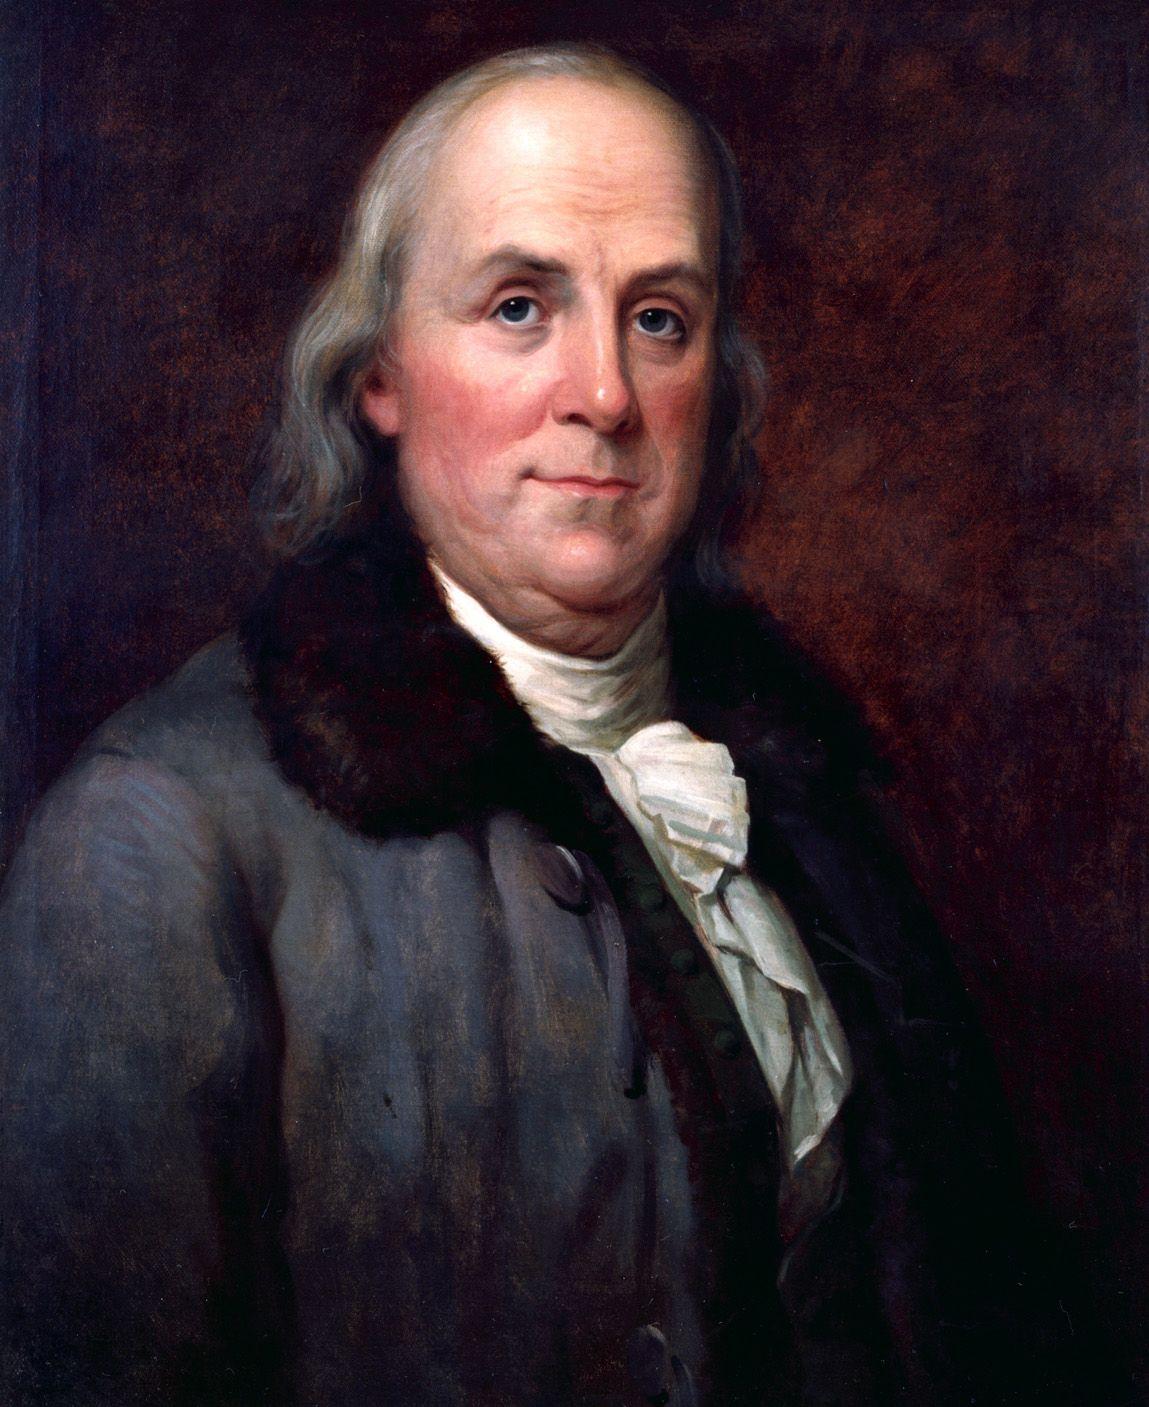 pic new posts: Wallpaper Benjamin Franklin